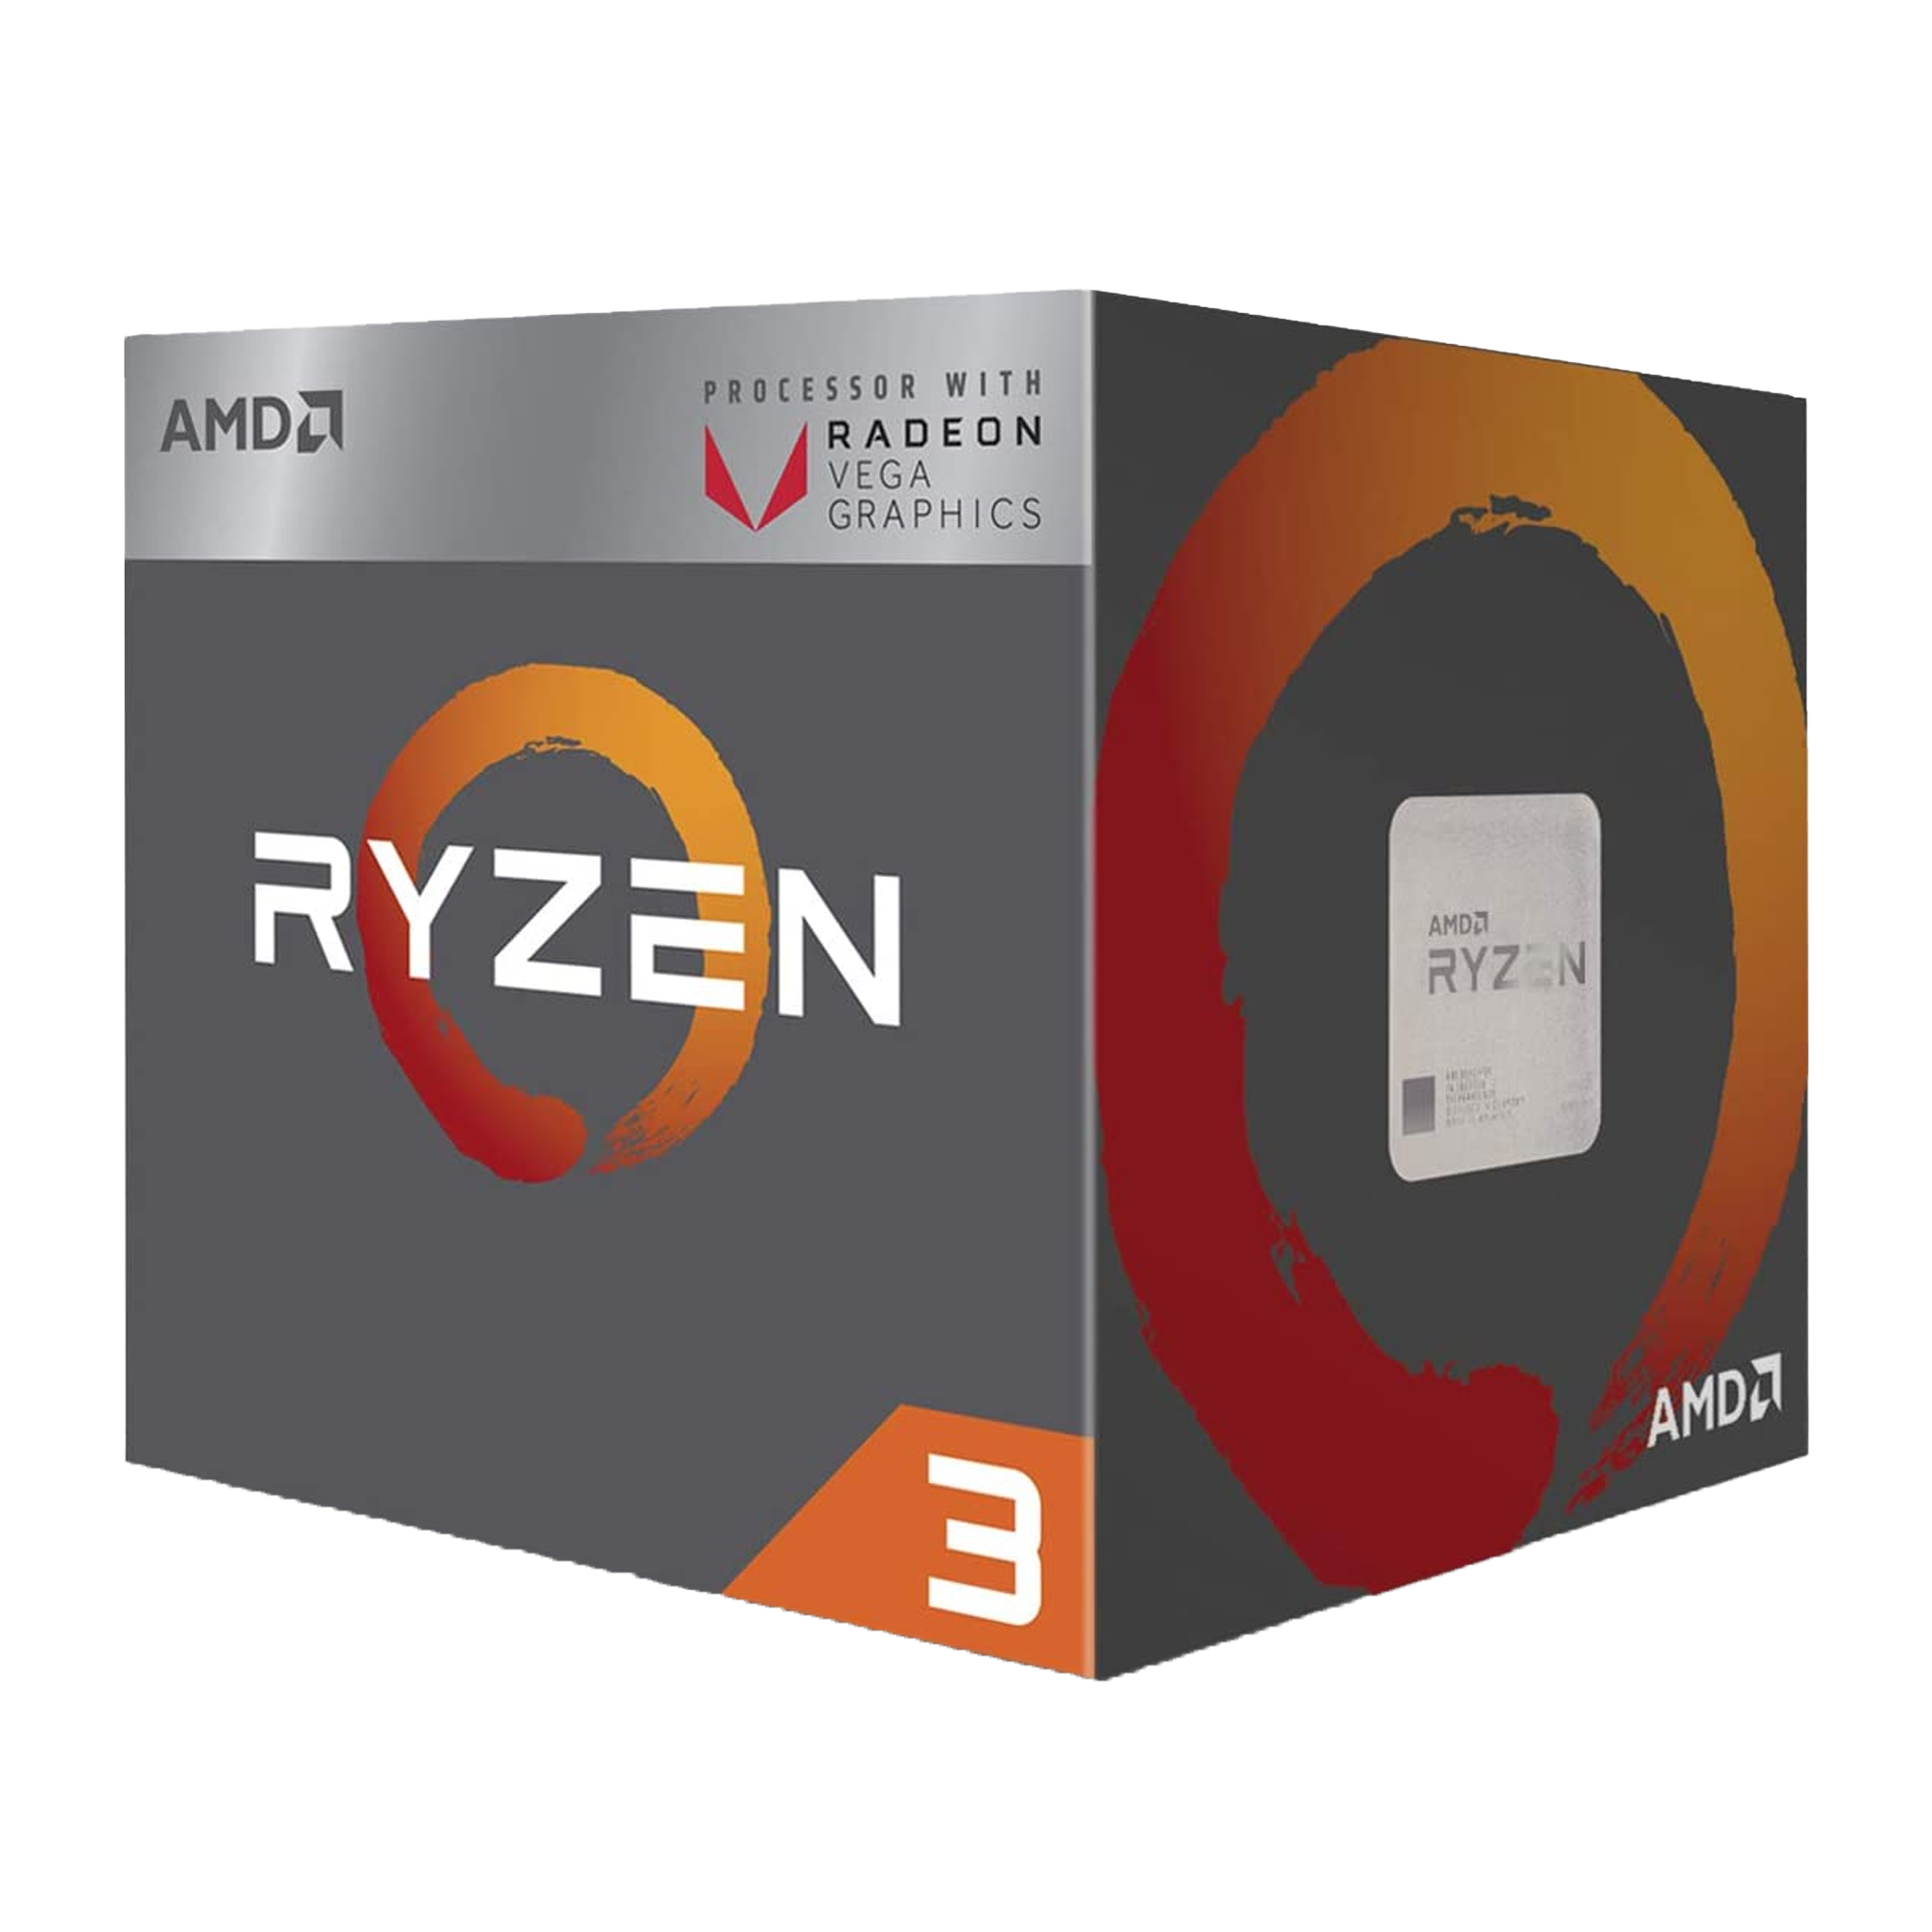 AMD Ryzen™ 3 2200G with Radeon™ Vega 8 Graphics